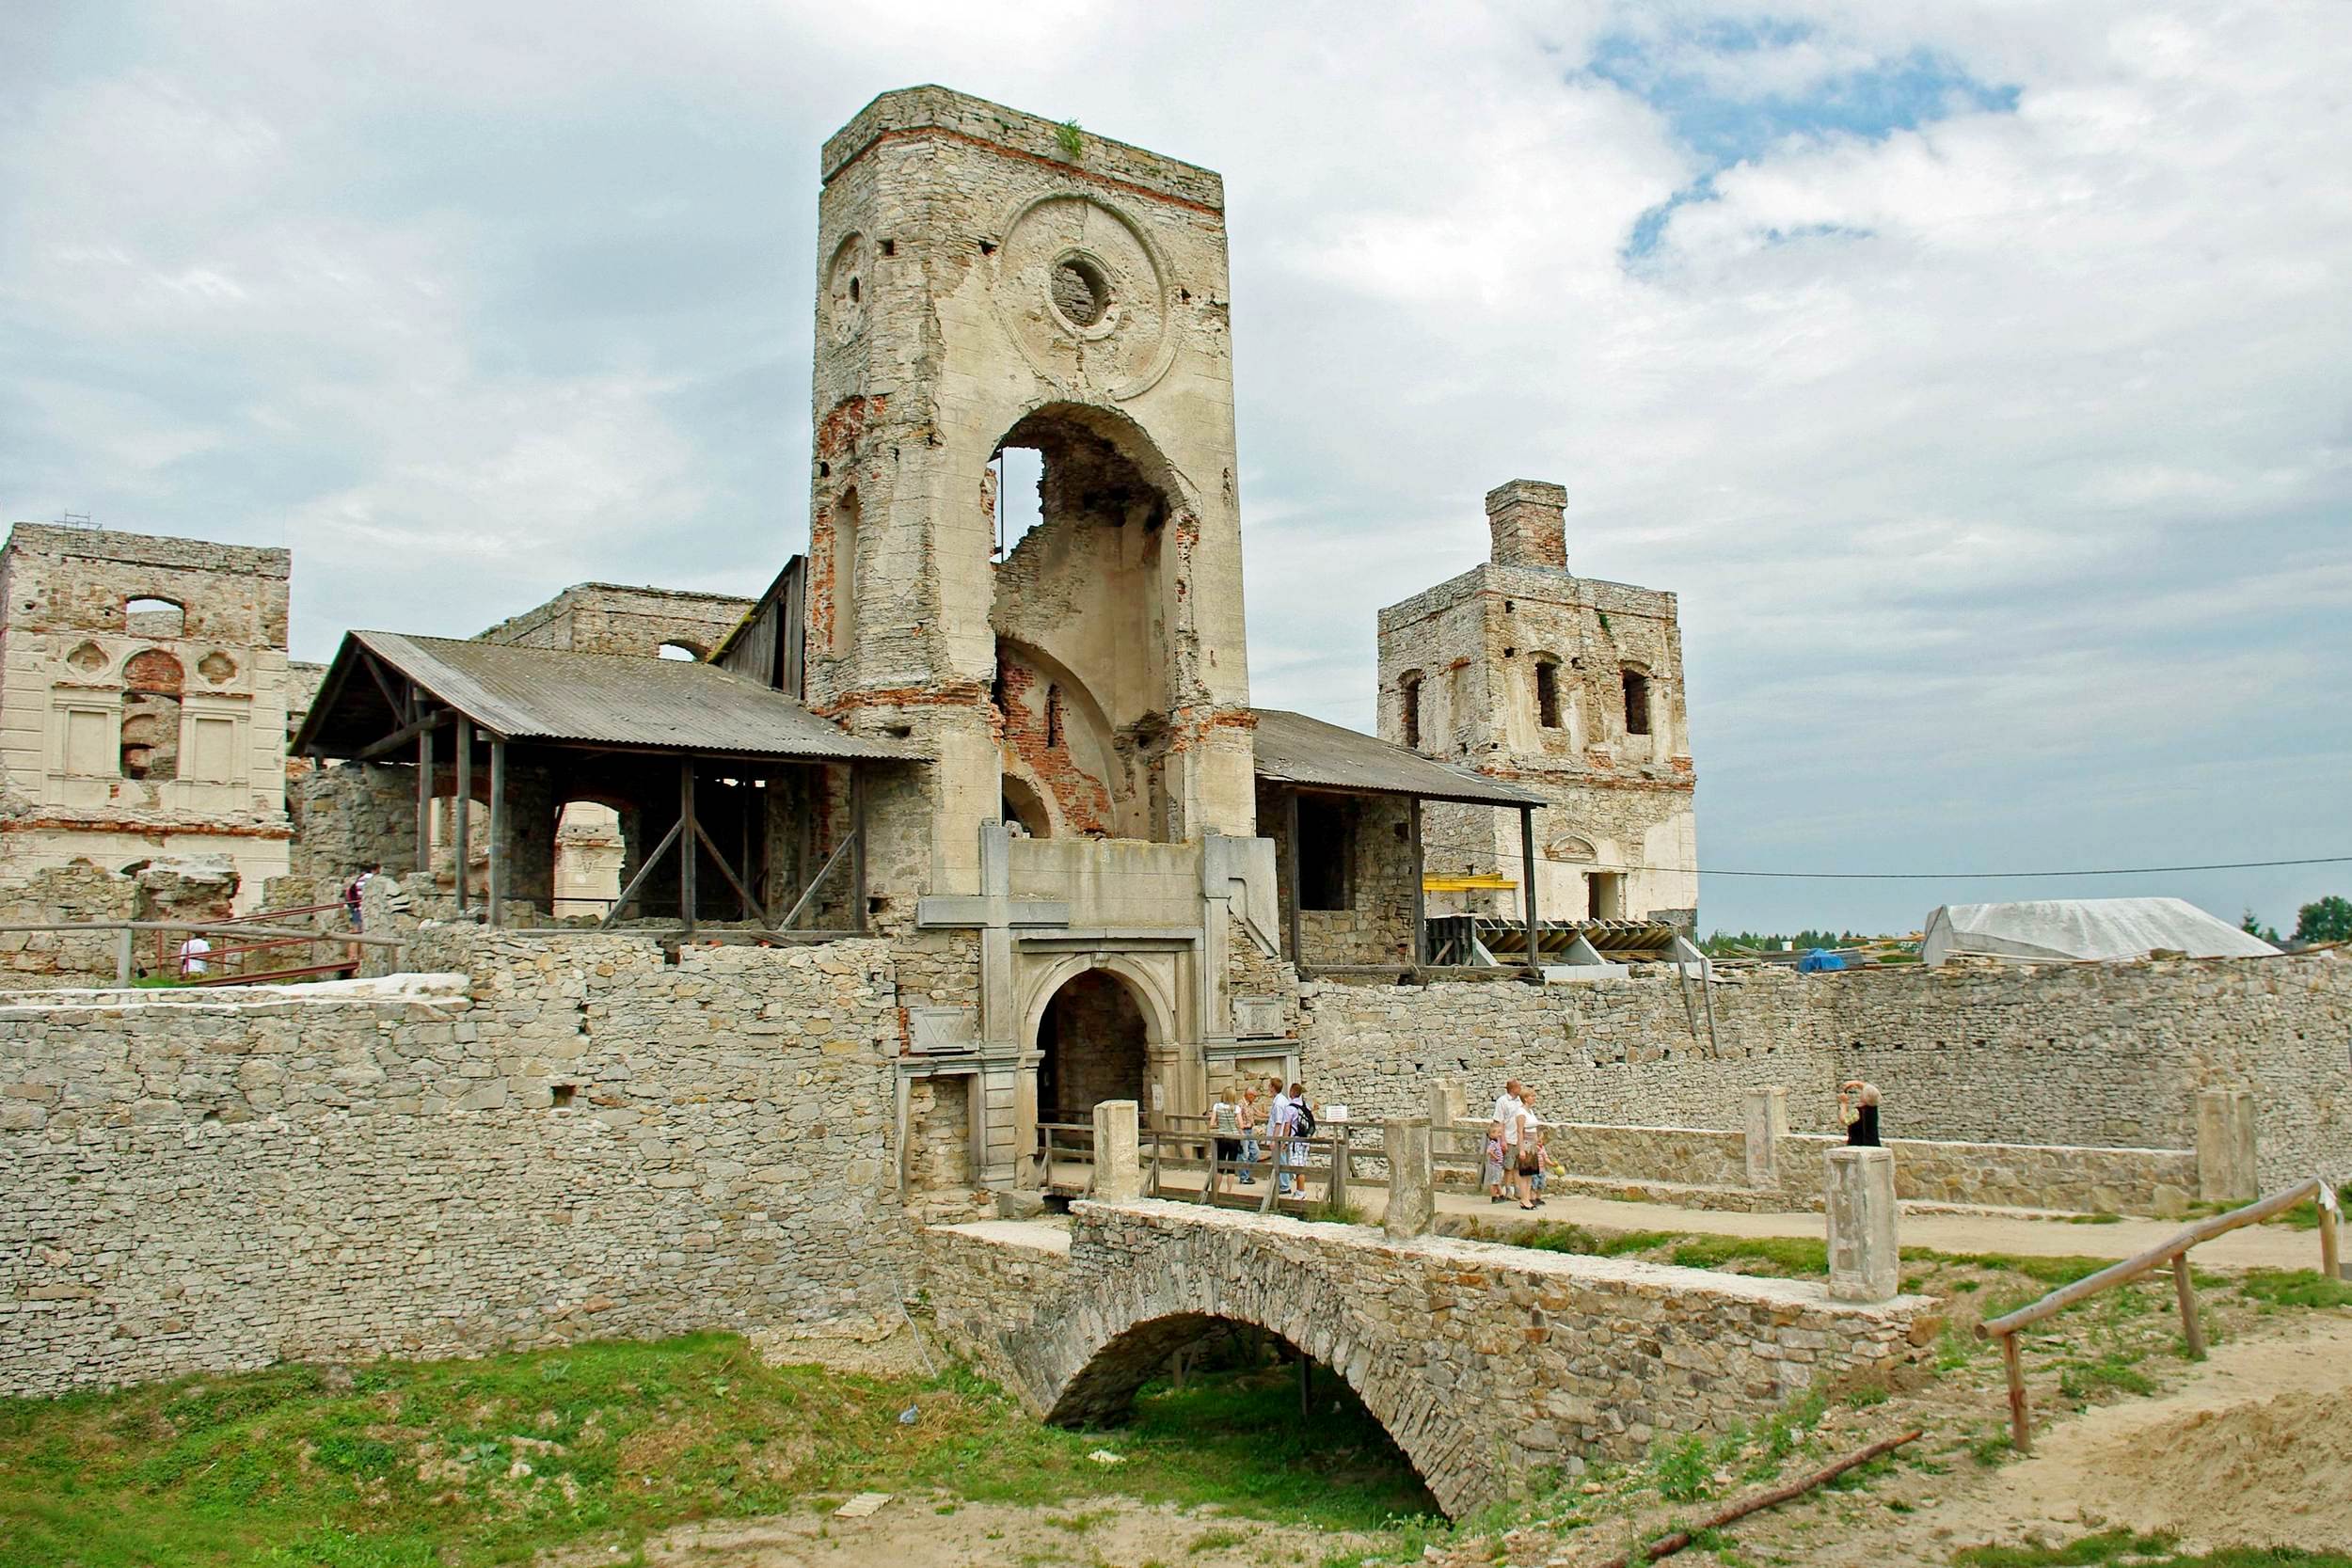 Brama zamku Krzyżtopór